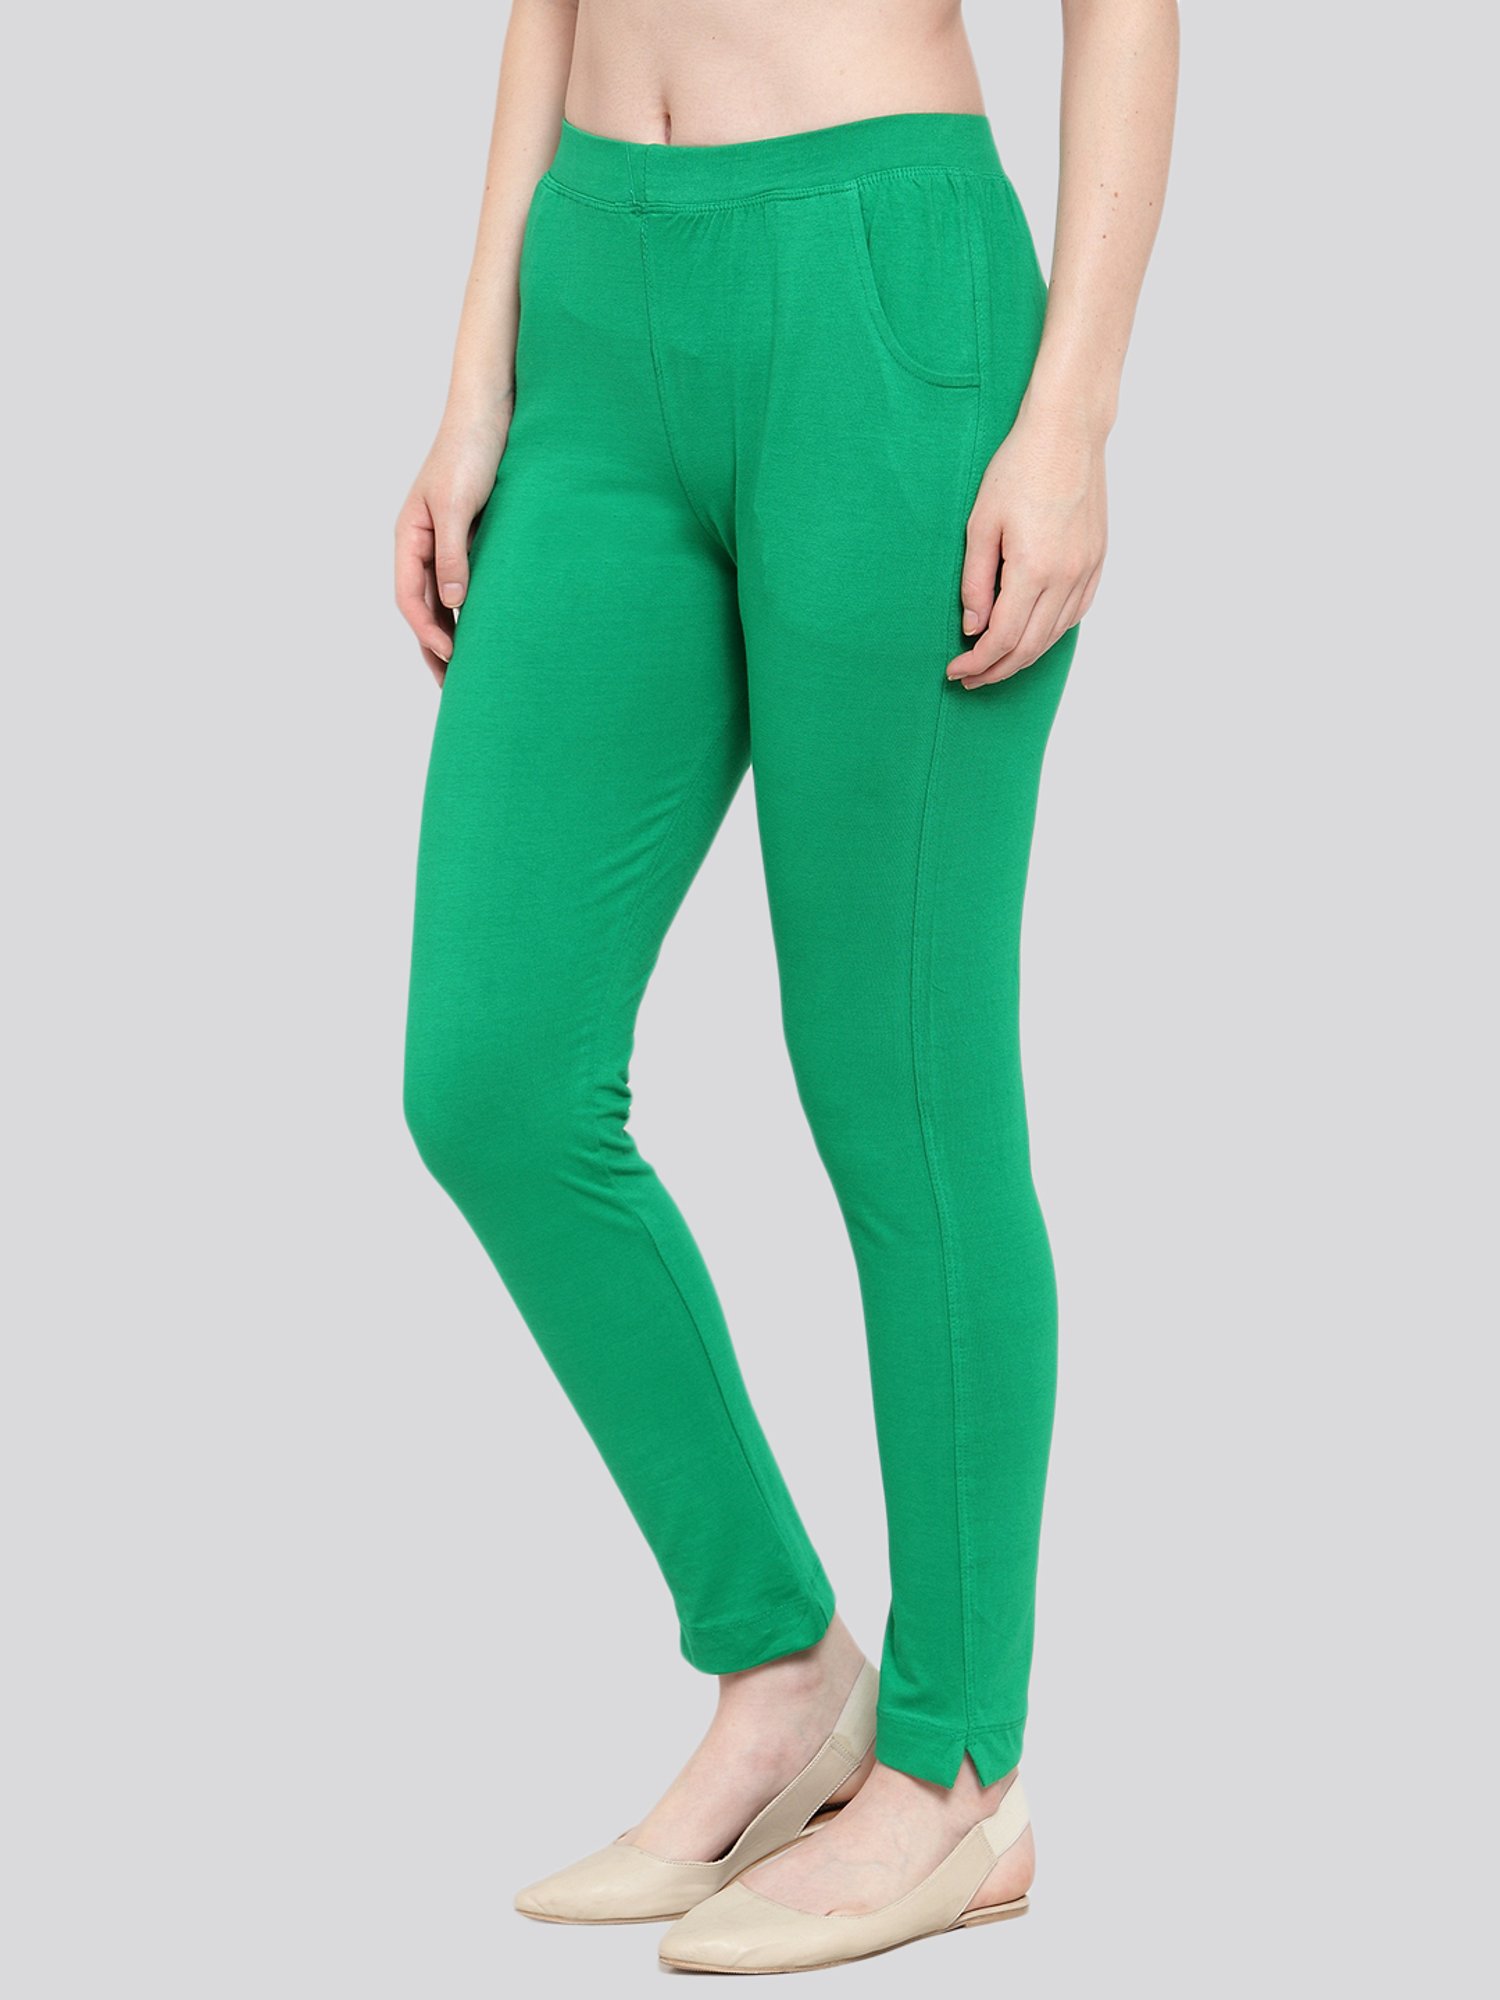 Buy TAG 7 Green Cotton Leggings - Pack Of 2 for Women Online